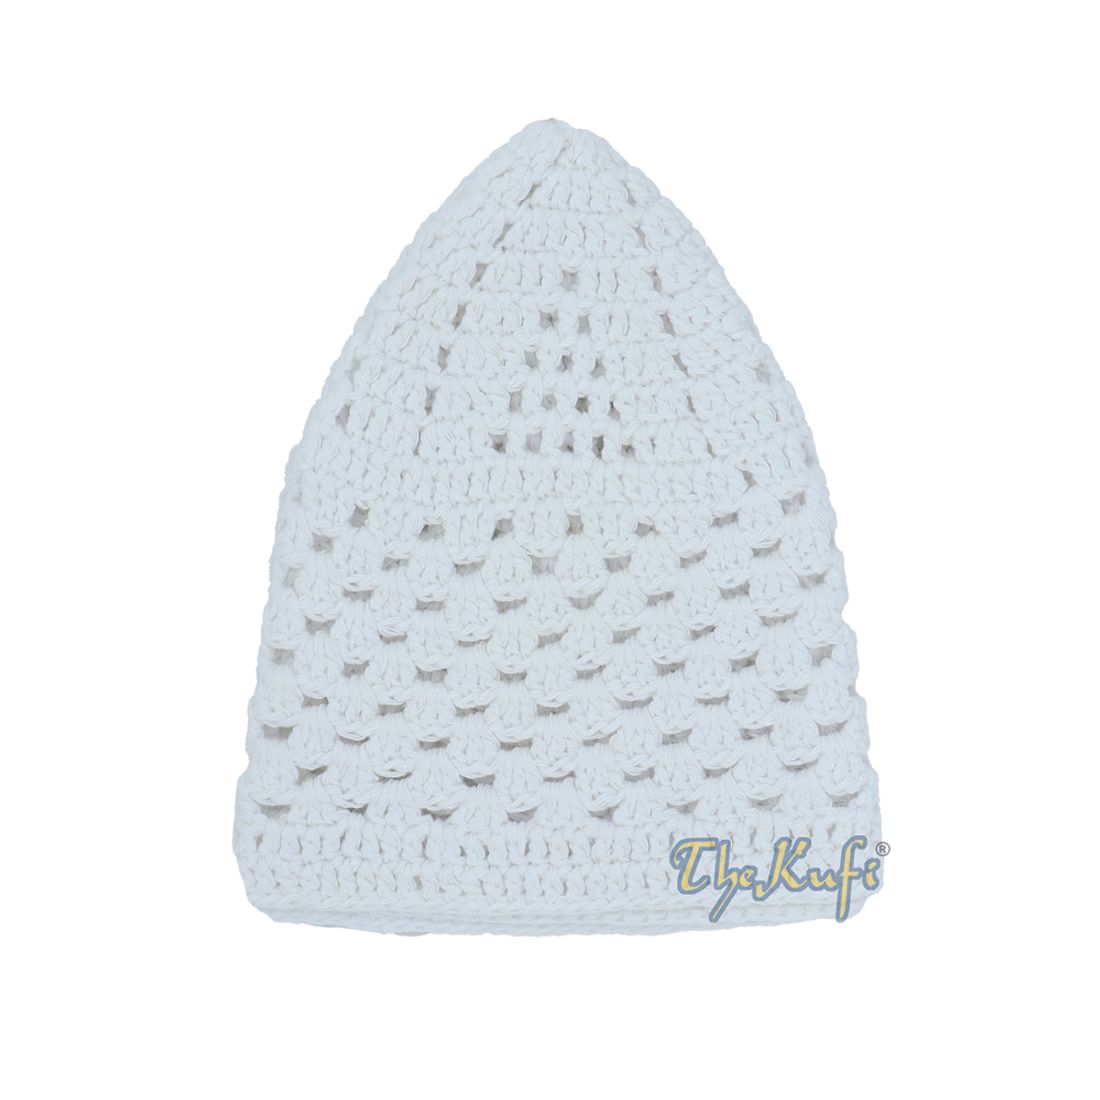 White Cotton Mix Crochet Comfortable Prayer Cap Open Weave Design